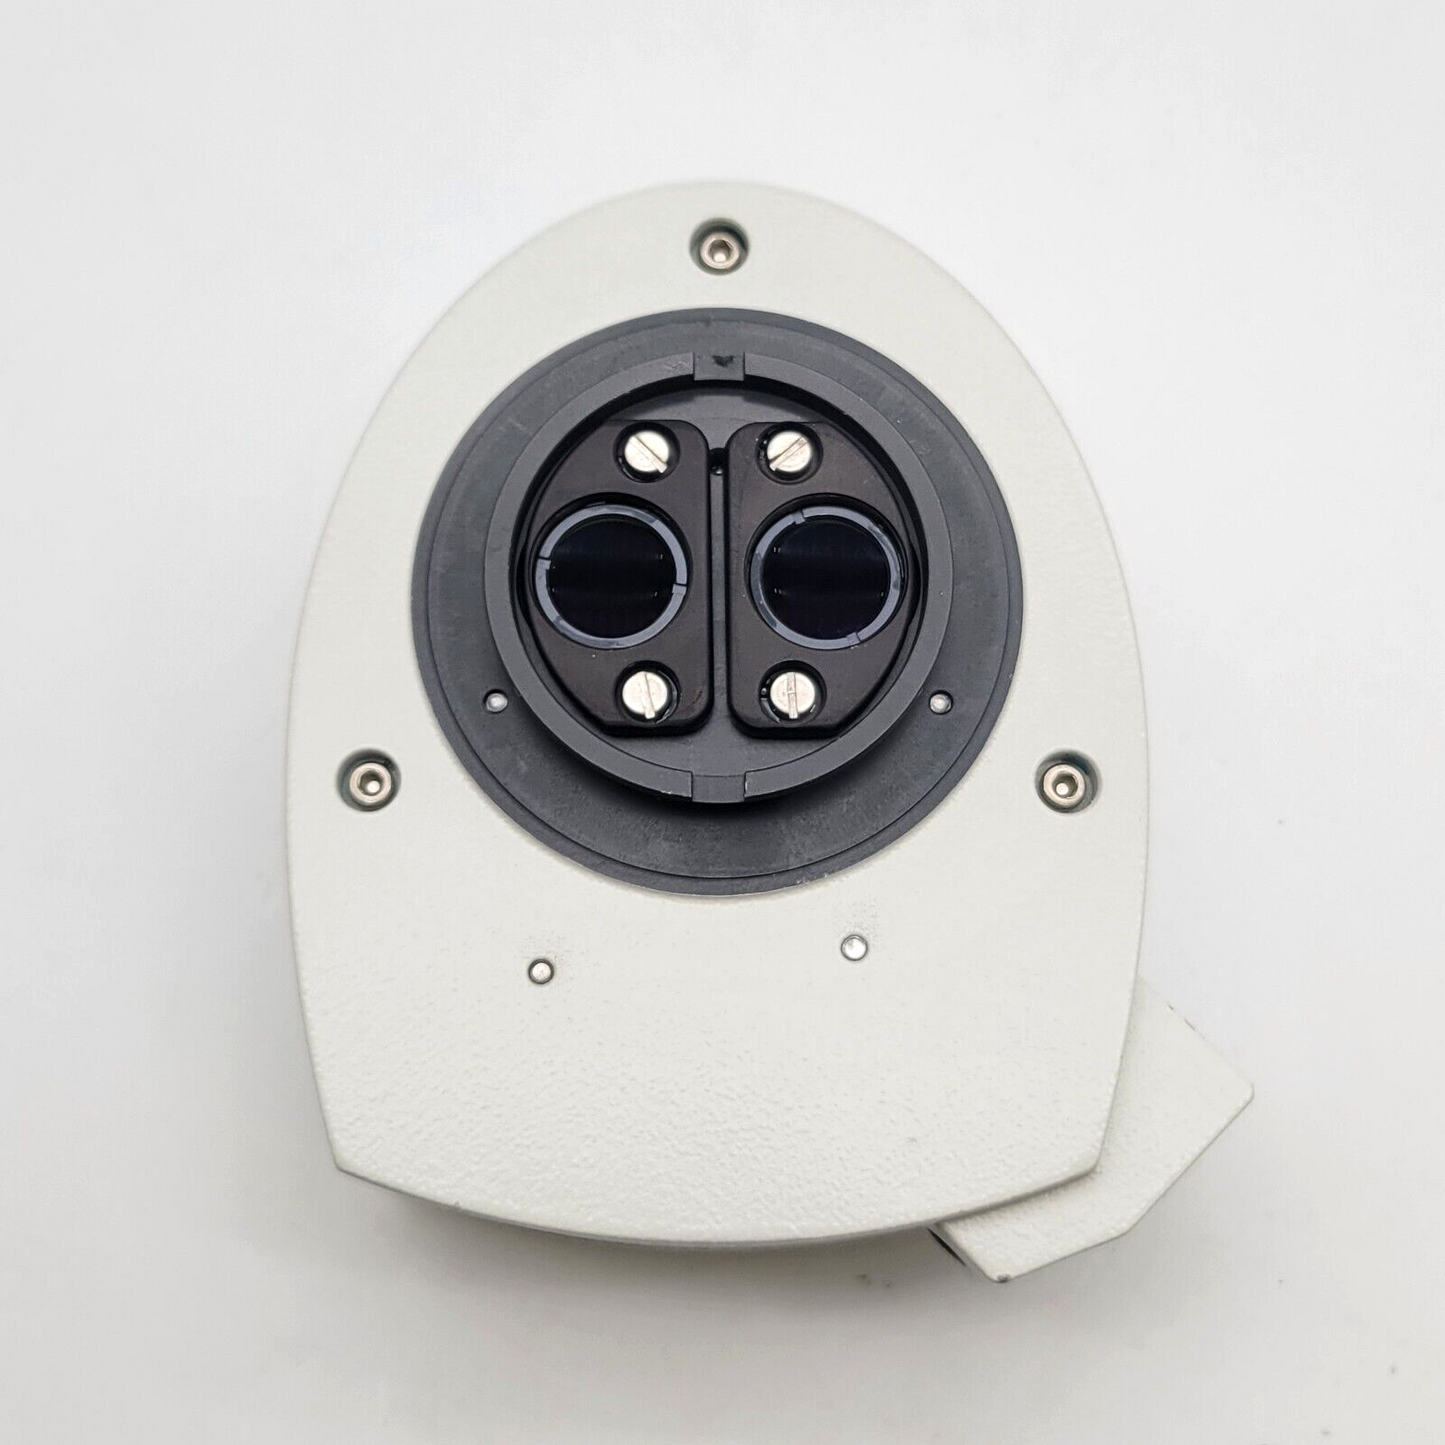 Leica Stereo Microscope Coaxial Illumination 1.5x 10446180 for MZ Series - microscopemarketplace